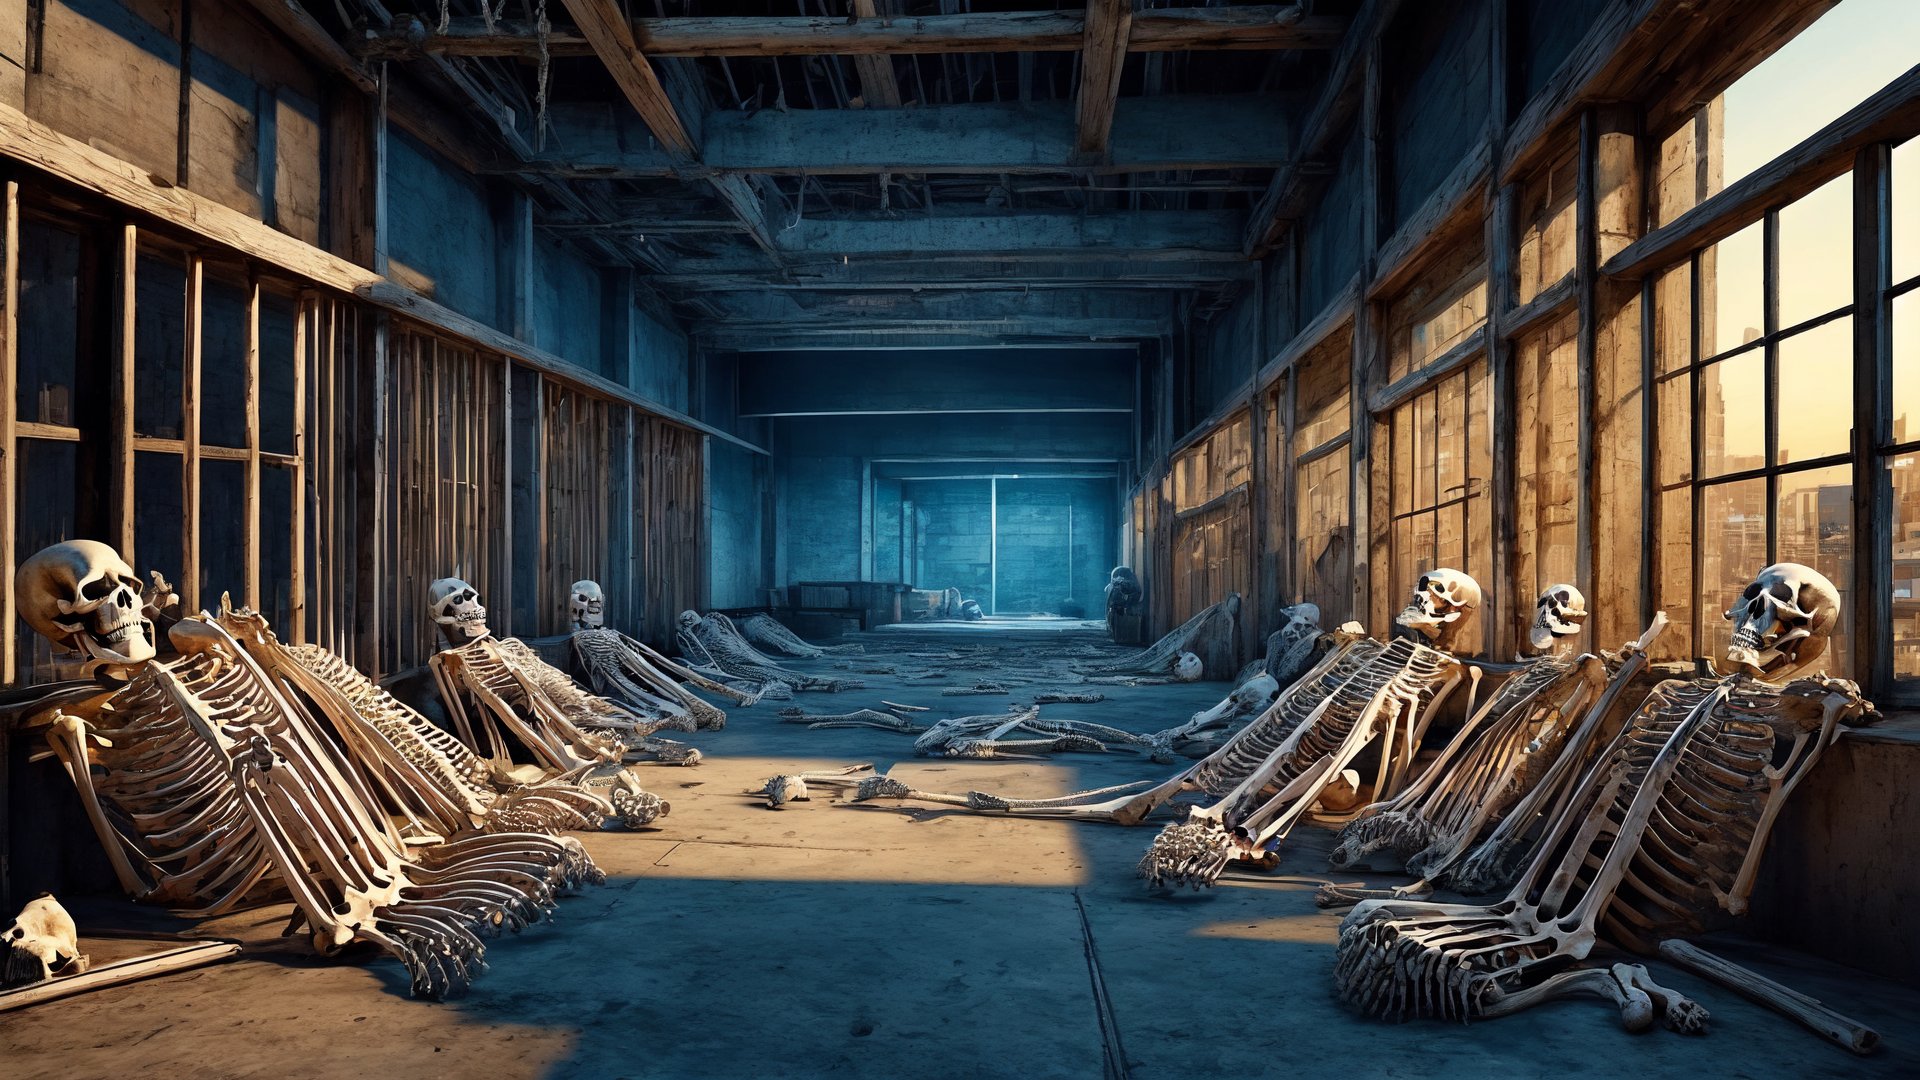 masterpiece, HD, prison, Cyberpunk prison, skeleton, technology prison with piles of bones,photorealistic